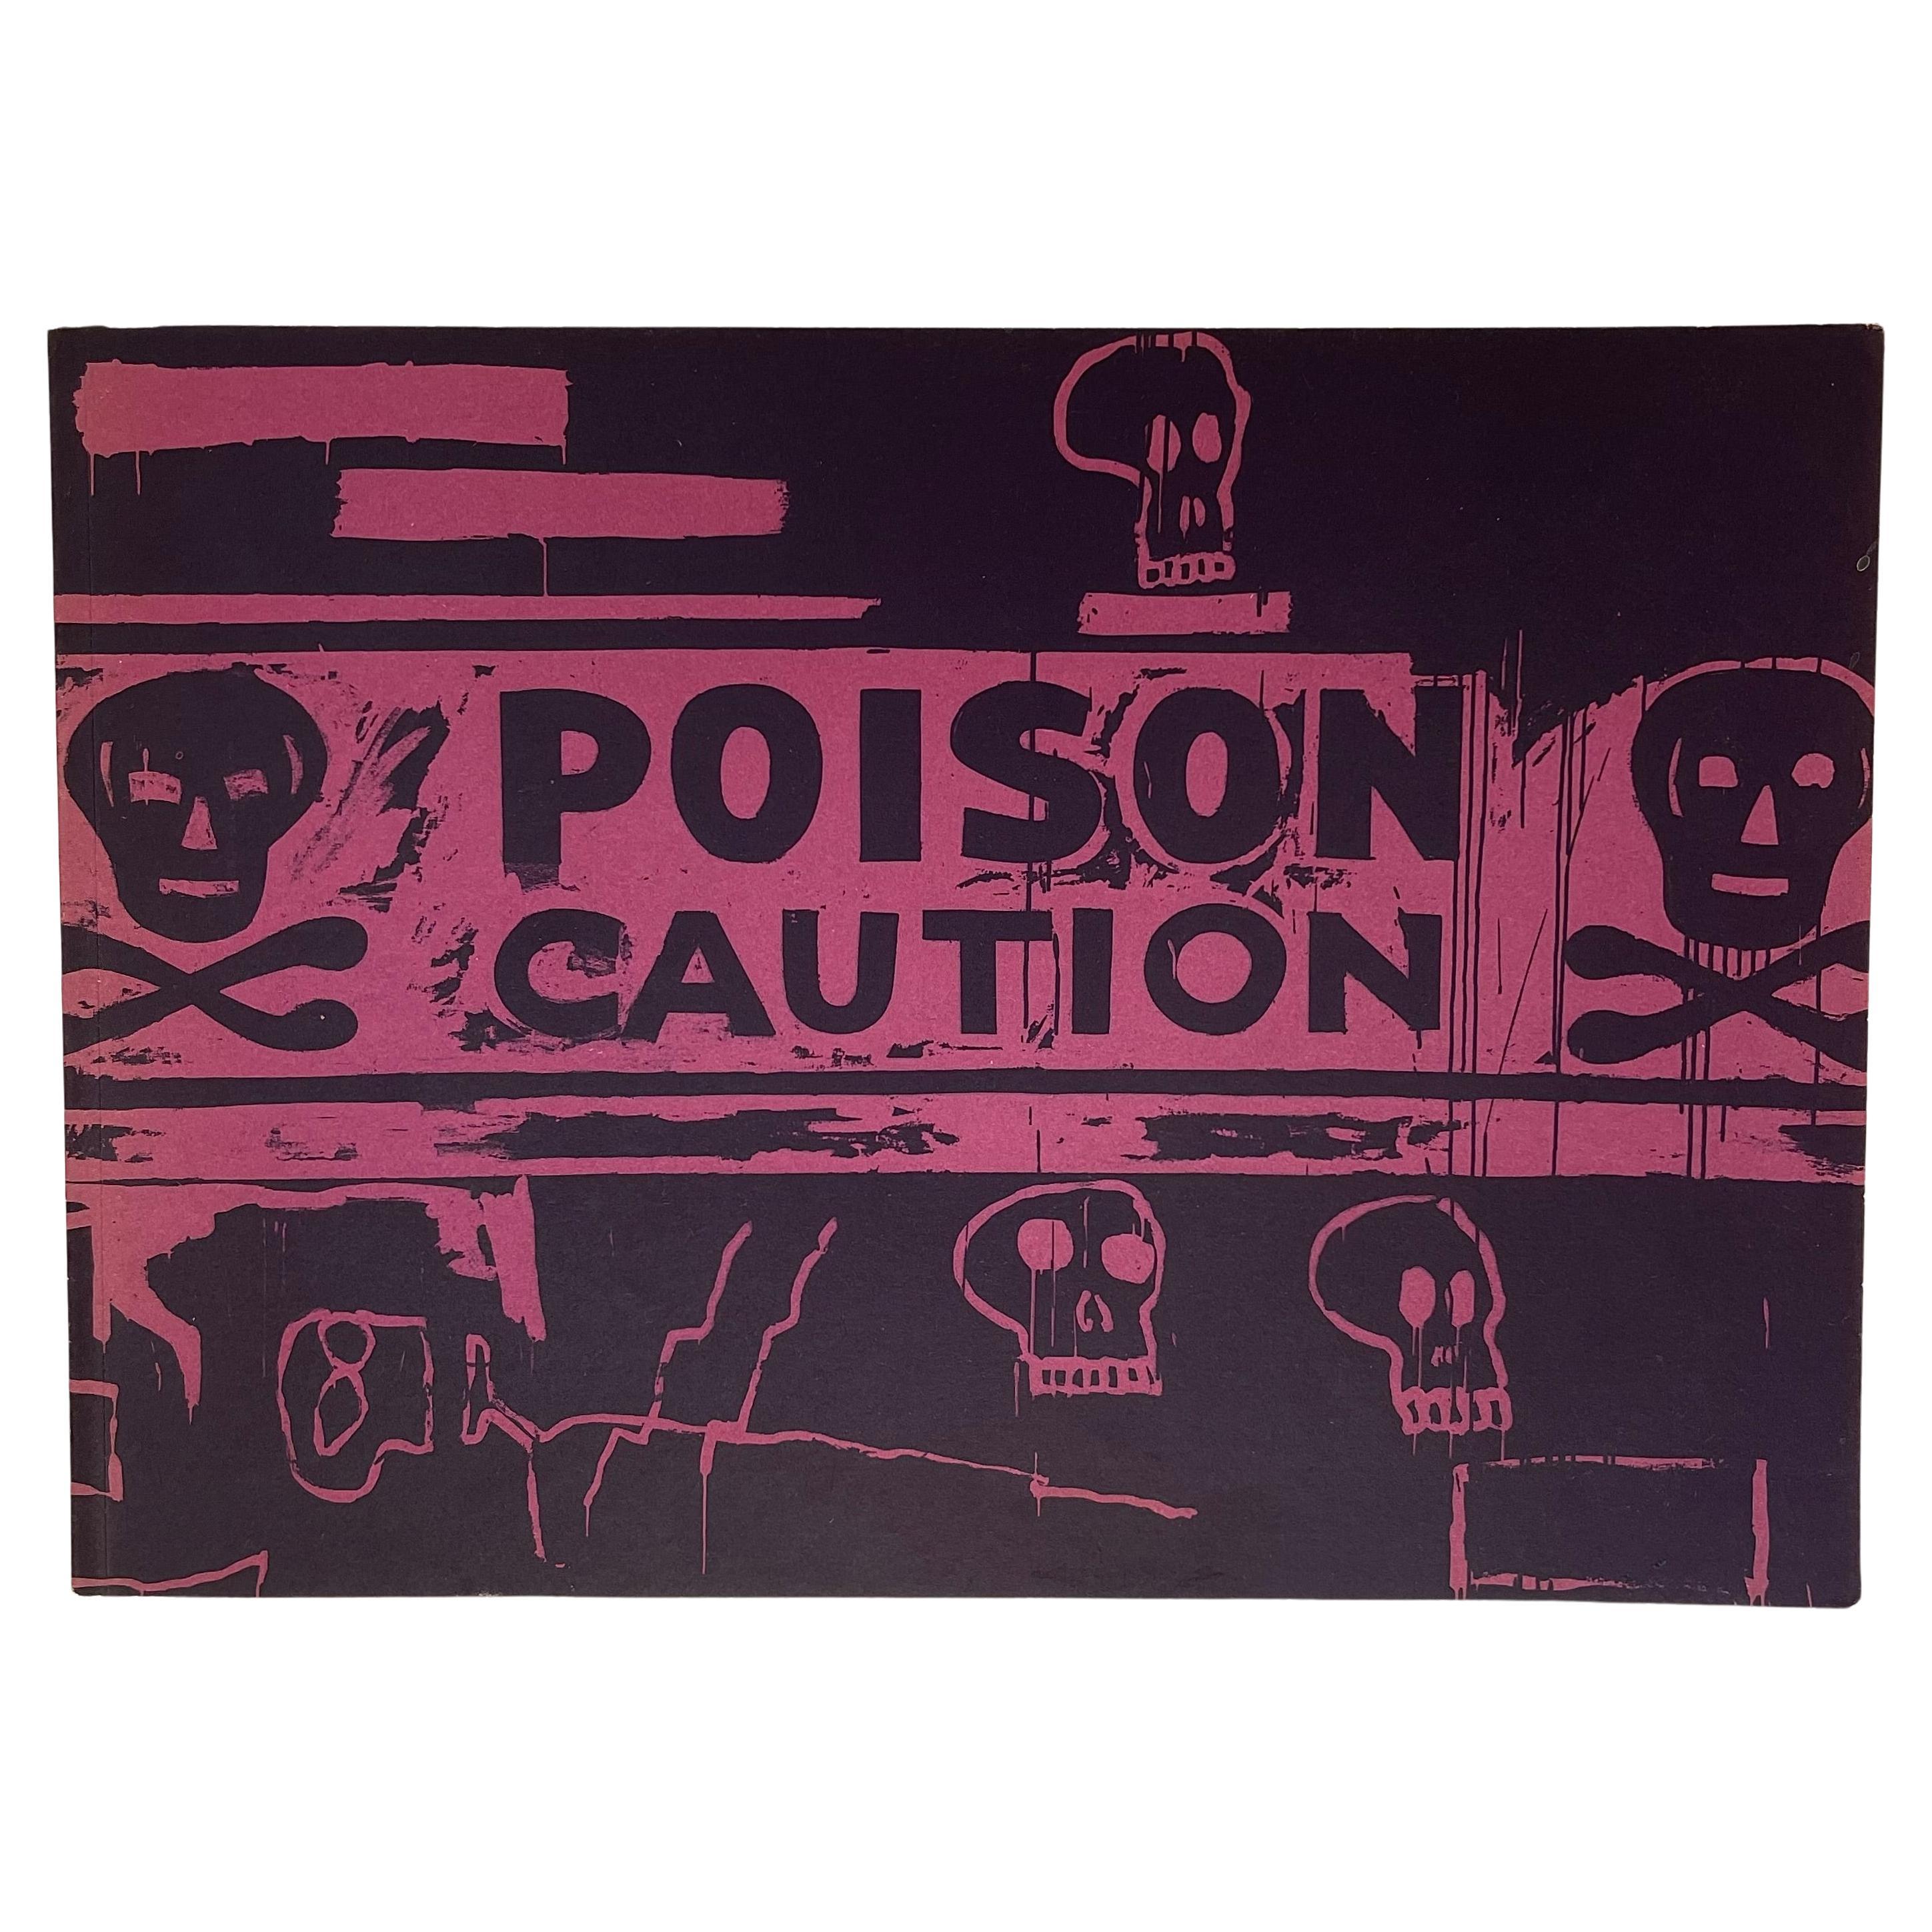 Collaborations: Andy Warhol Jean-Michel Basquiat. 1988